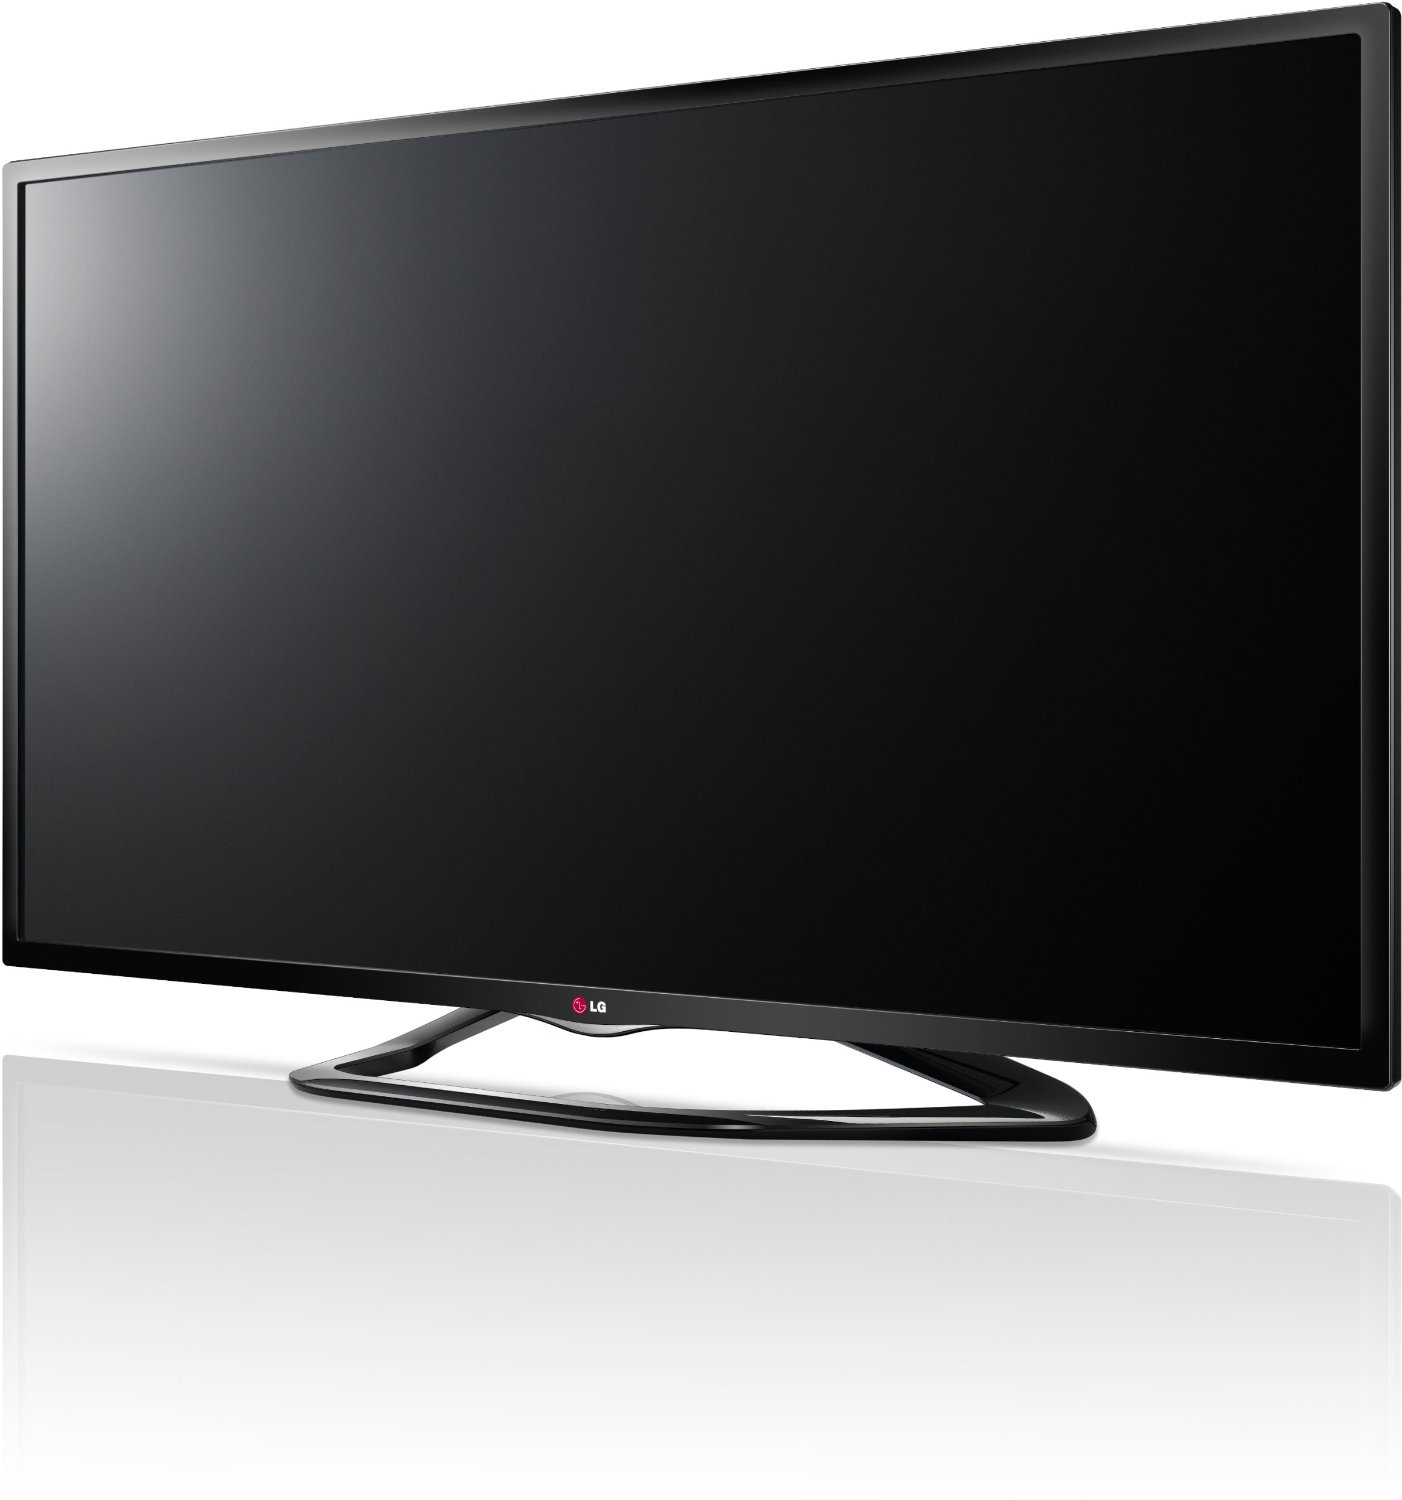 Smart TV - LG 32LN5758 80 cm (32 Zoll)